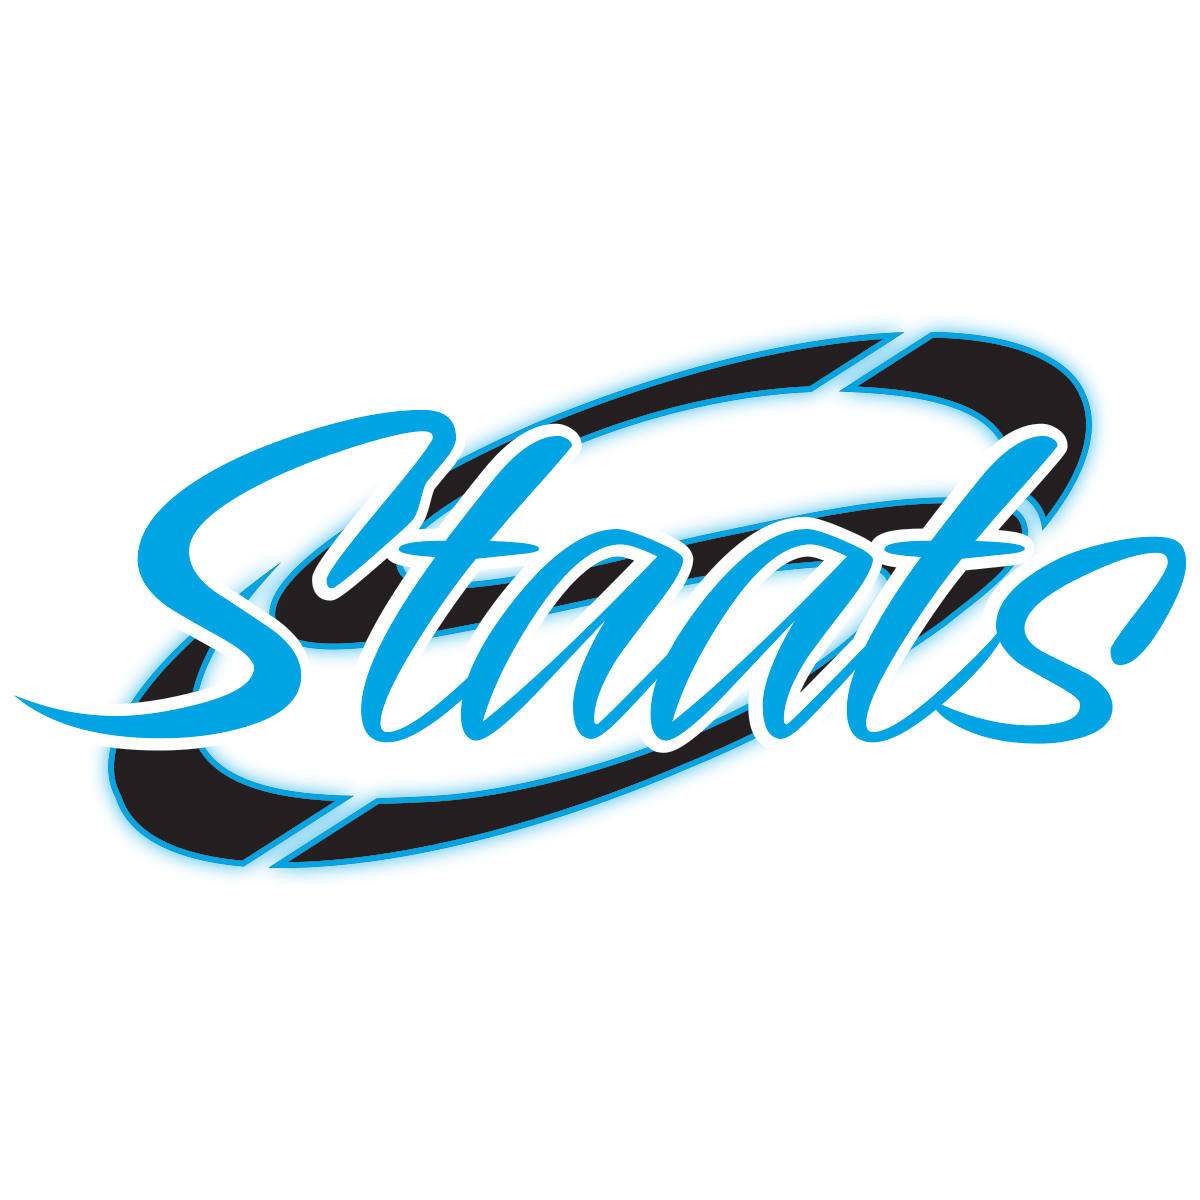 Staats Awards 's Logo